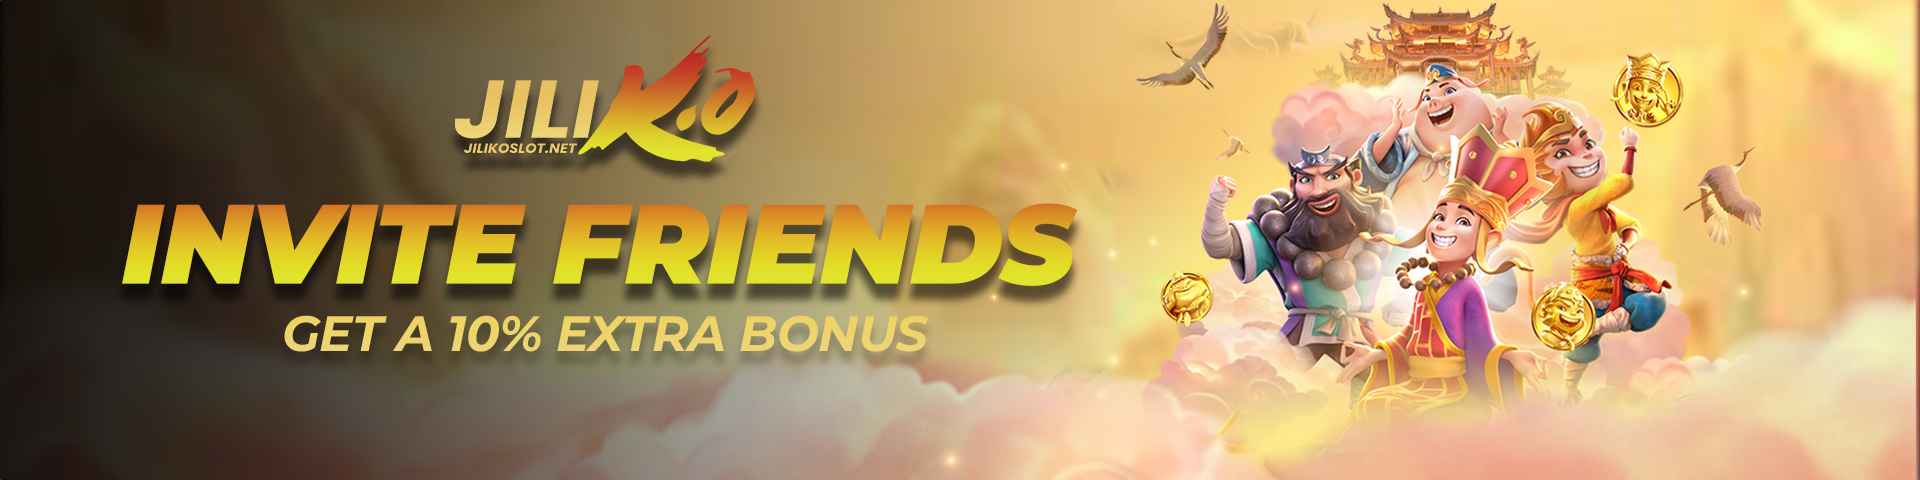 Jiliko Invite Friends Extra Bonus 10%